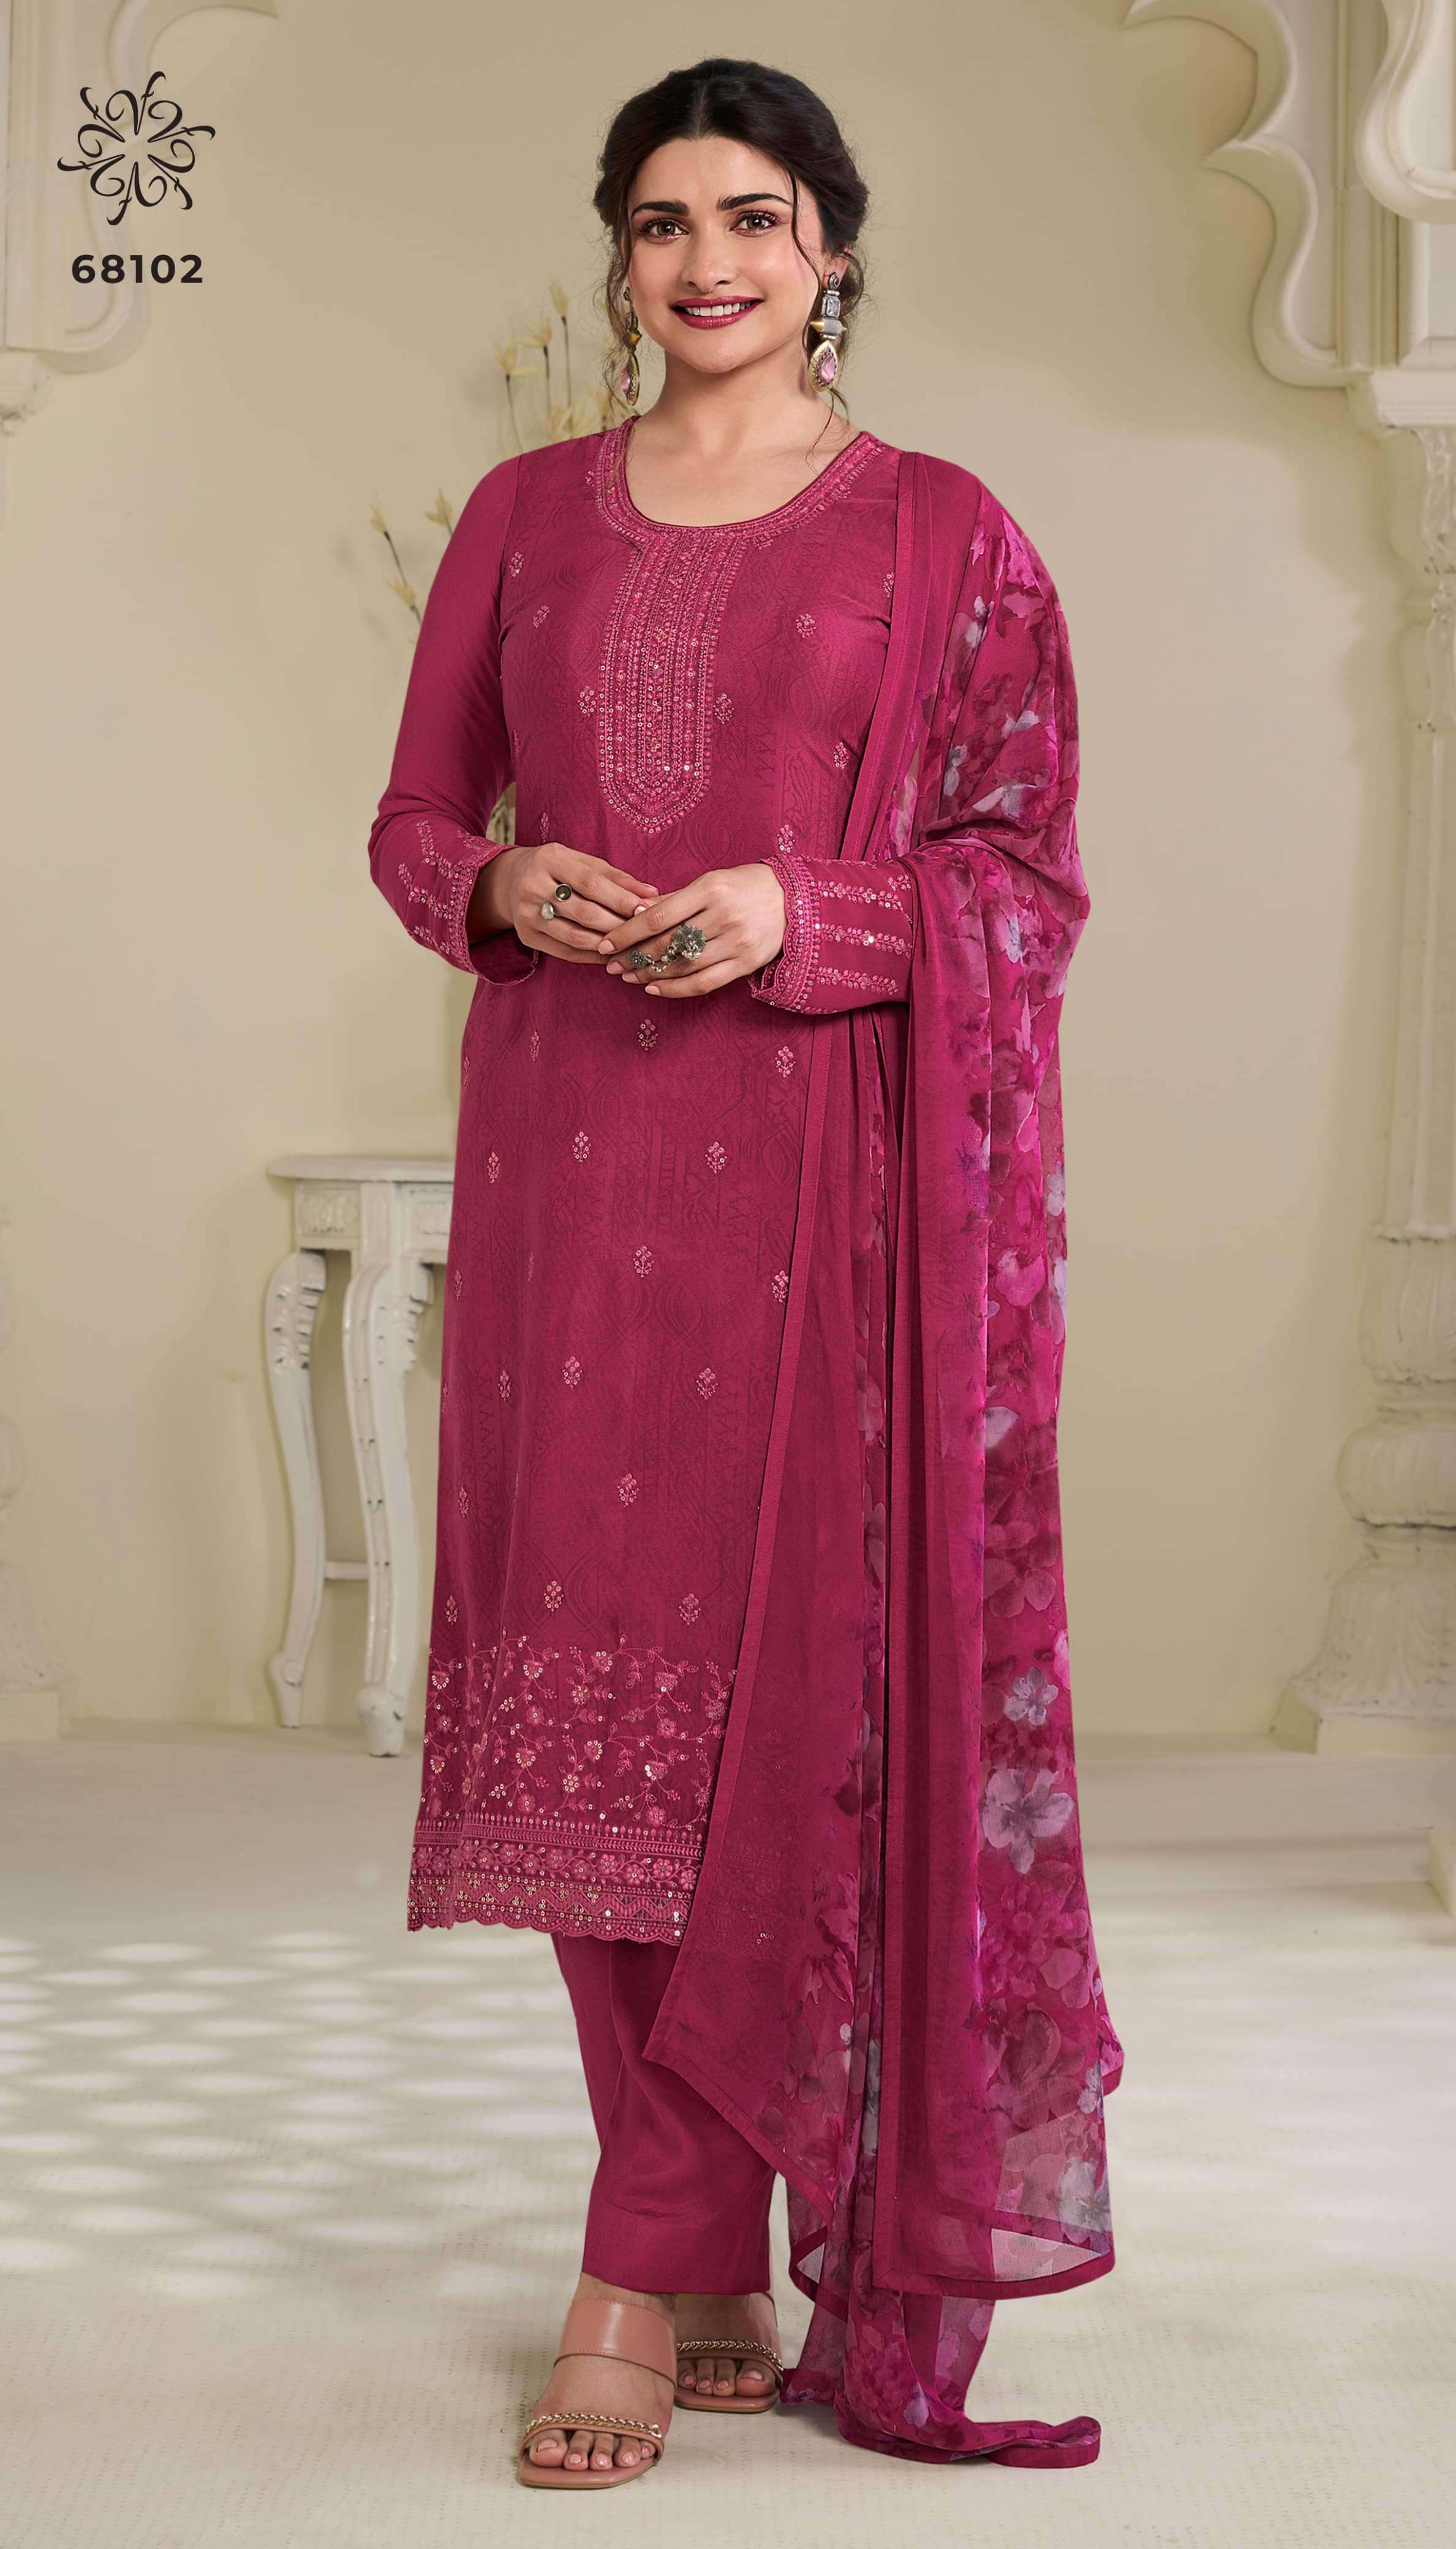 vinay fashion silkina royal crepe 45 digital print royal crape catchy look salwar suit catalog